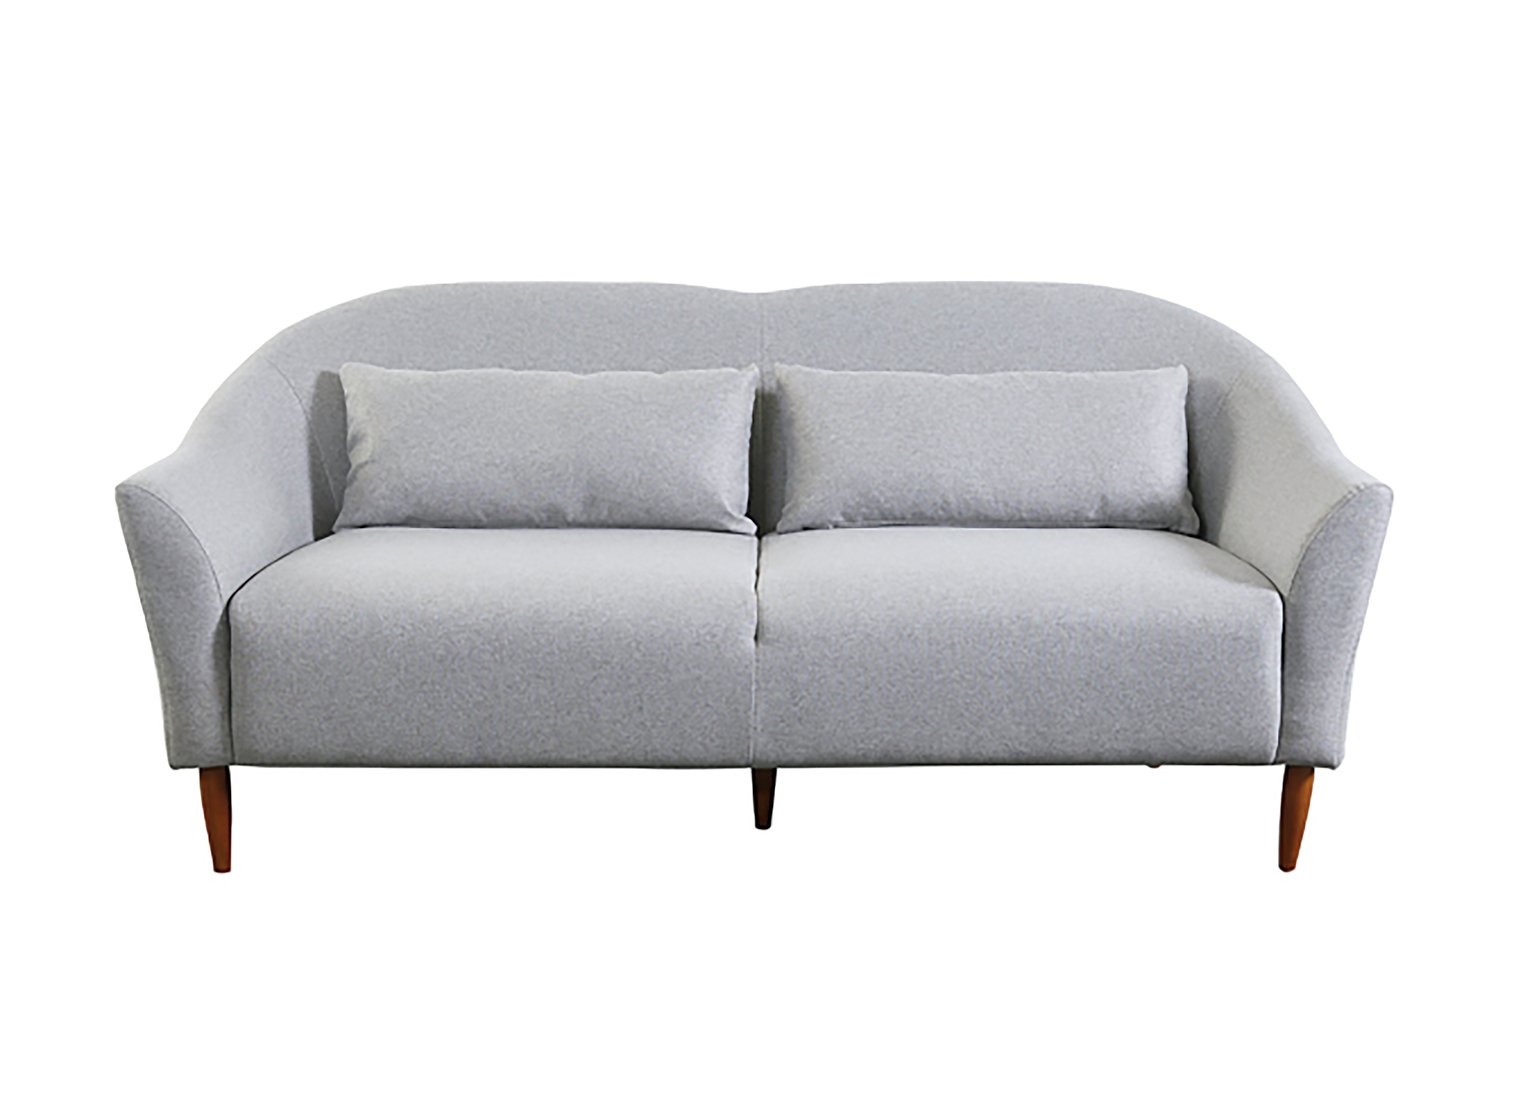 Habitat Lipps 3 Seater Fabric Sofa Review